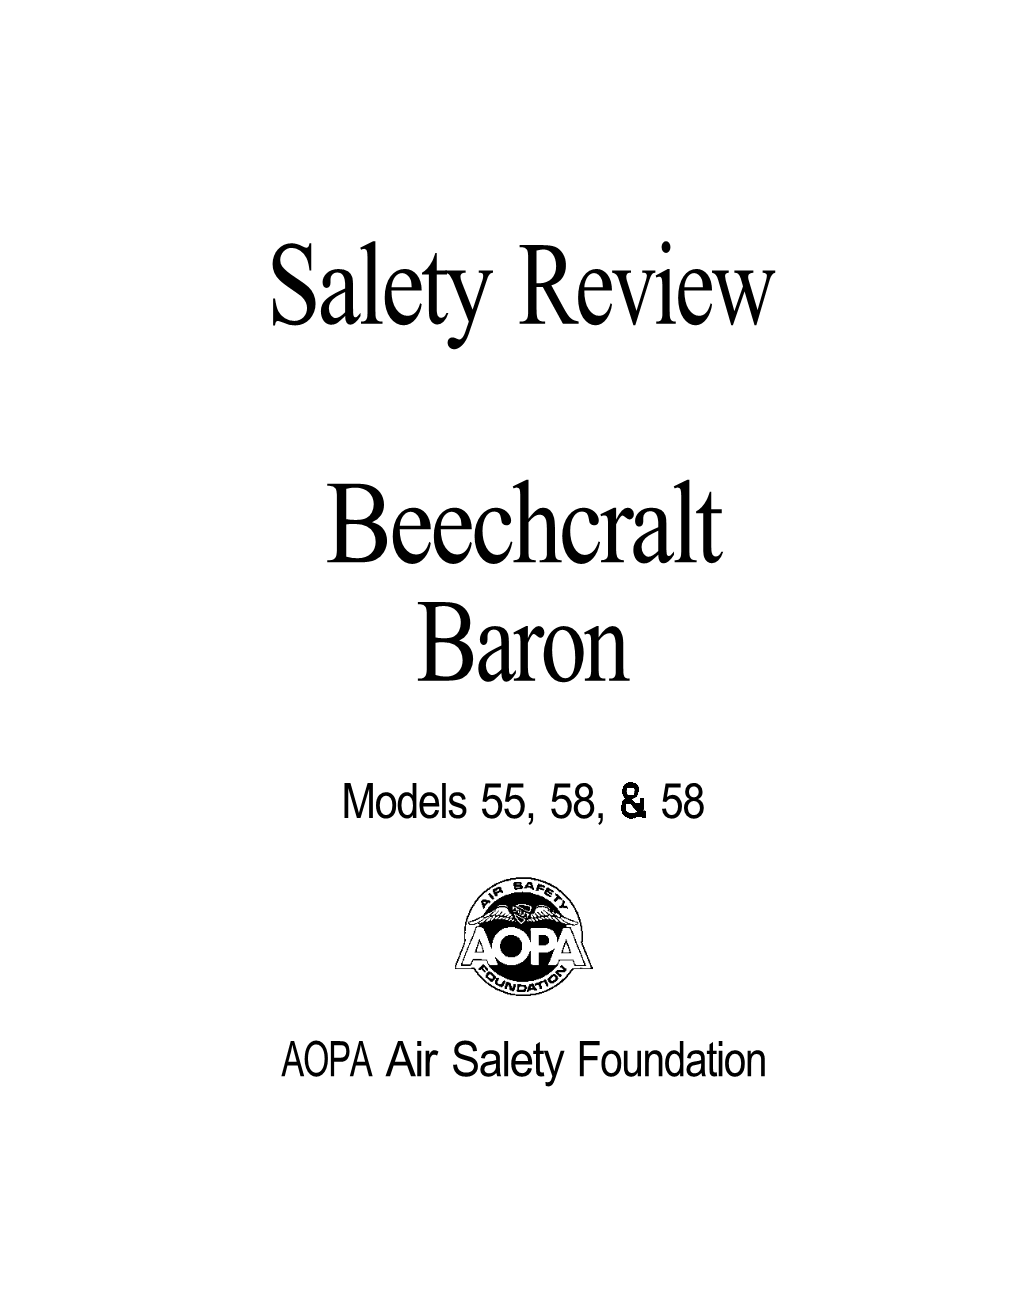 AOPA ASF Baron Safety Review